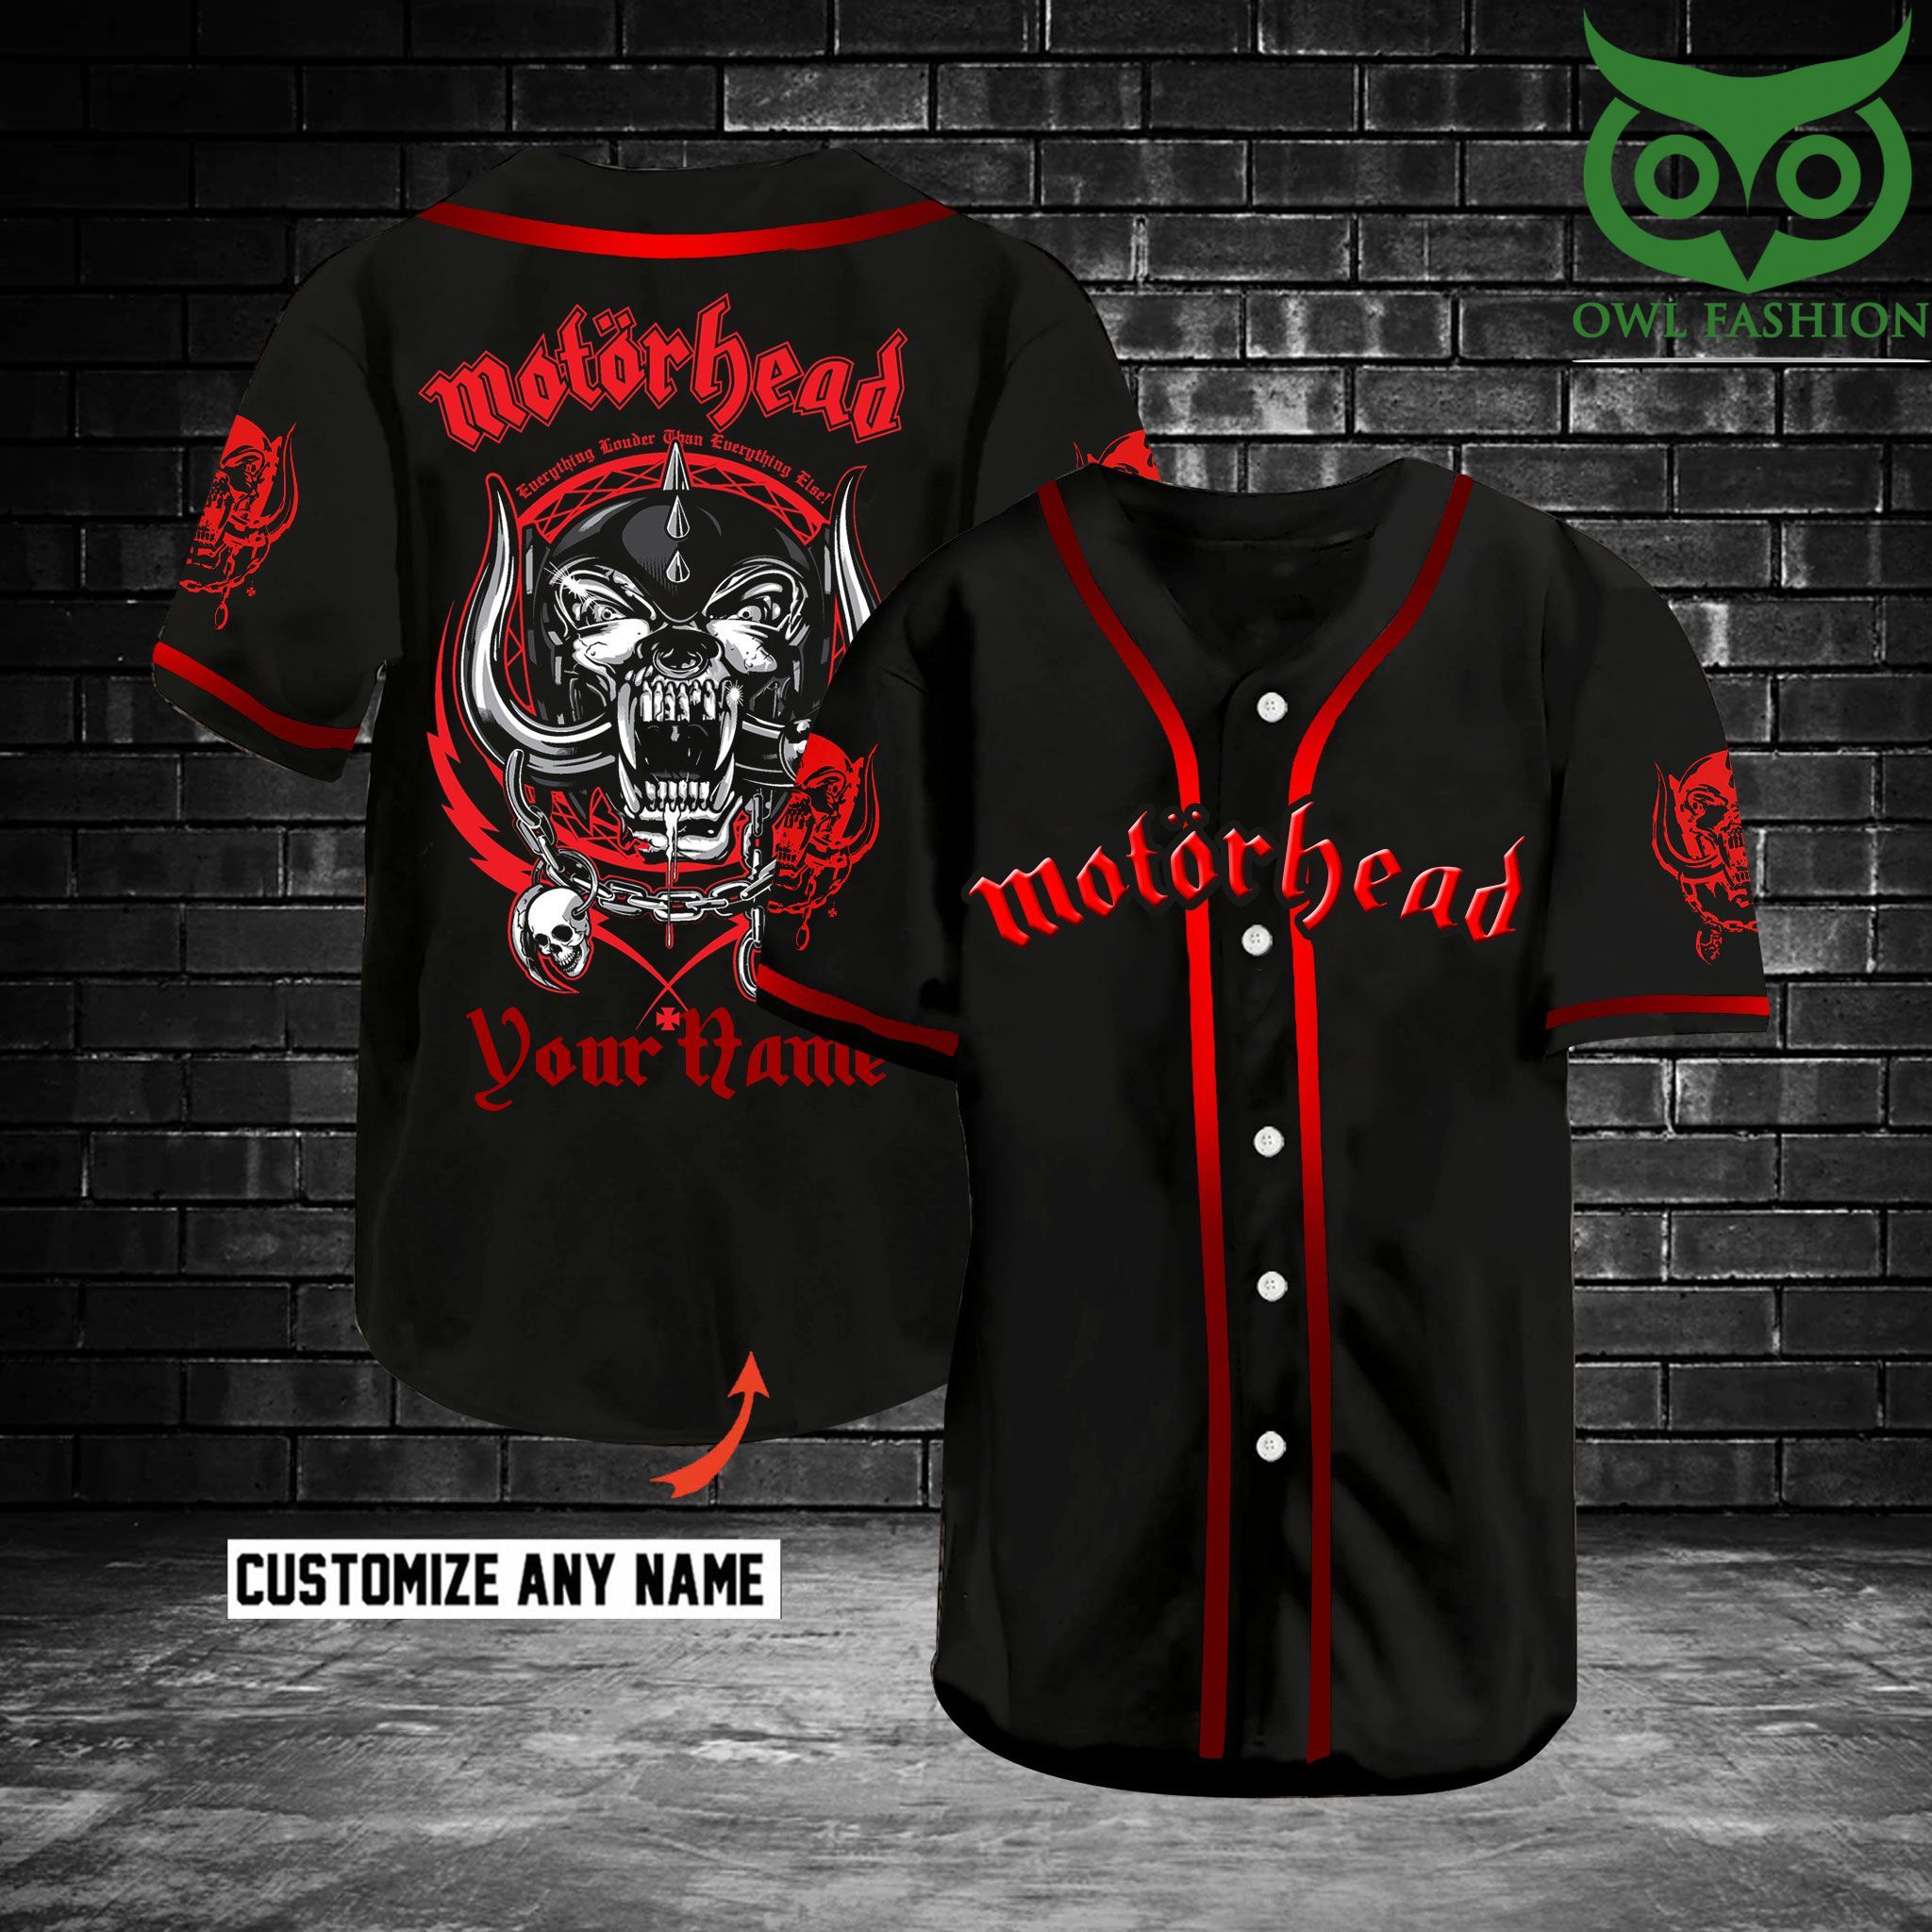 120 Motorhead Customize Name Baseball Jersey Shirt